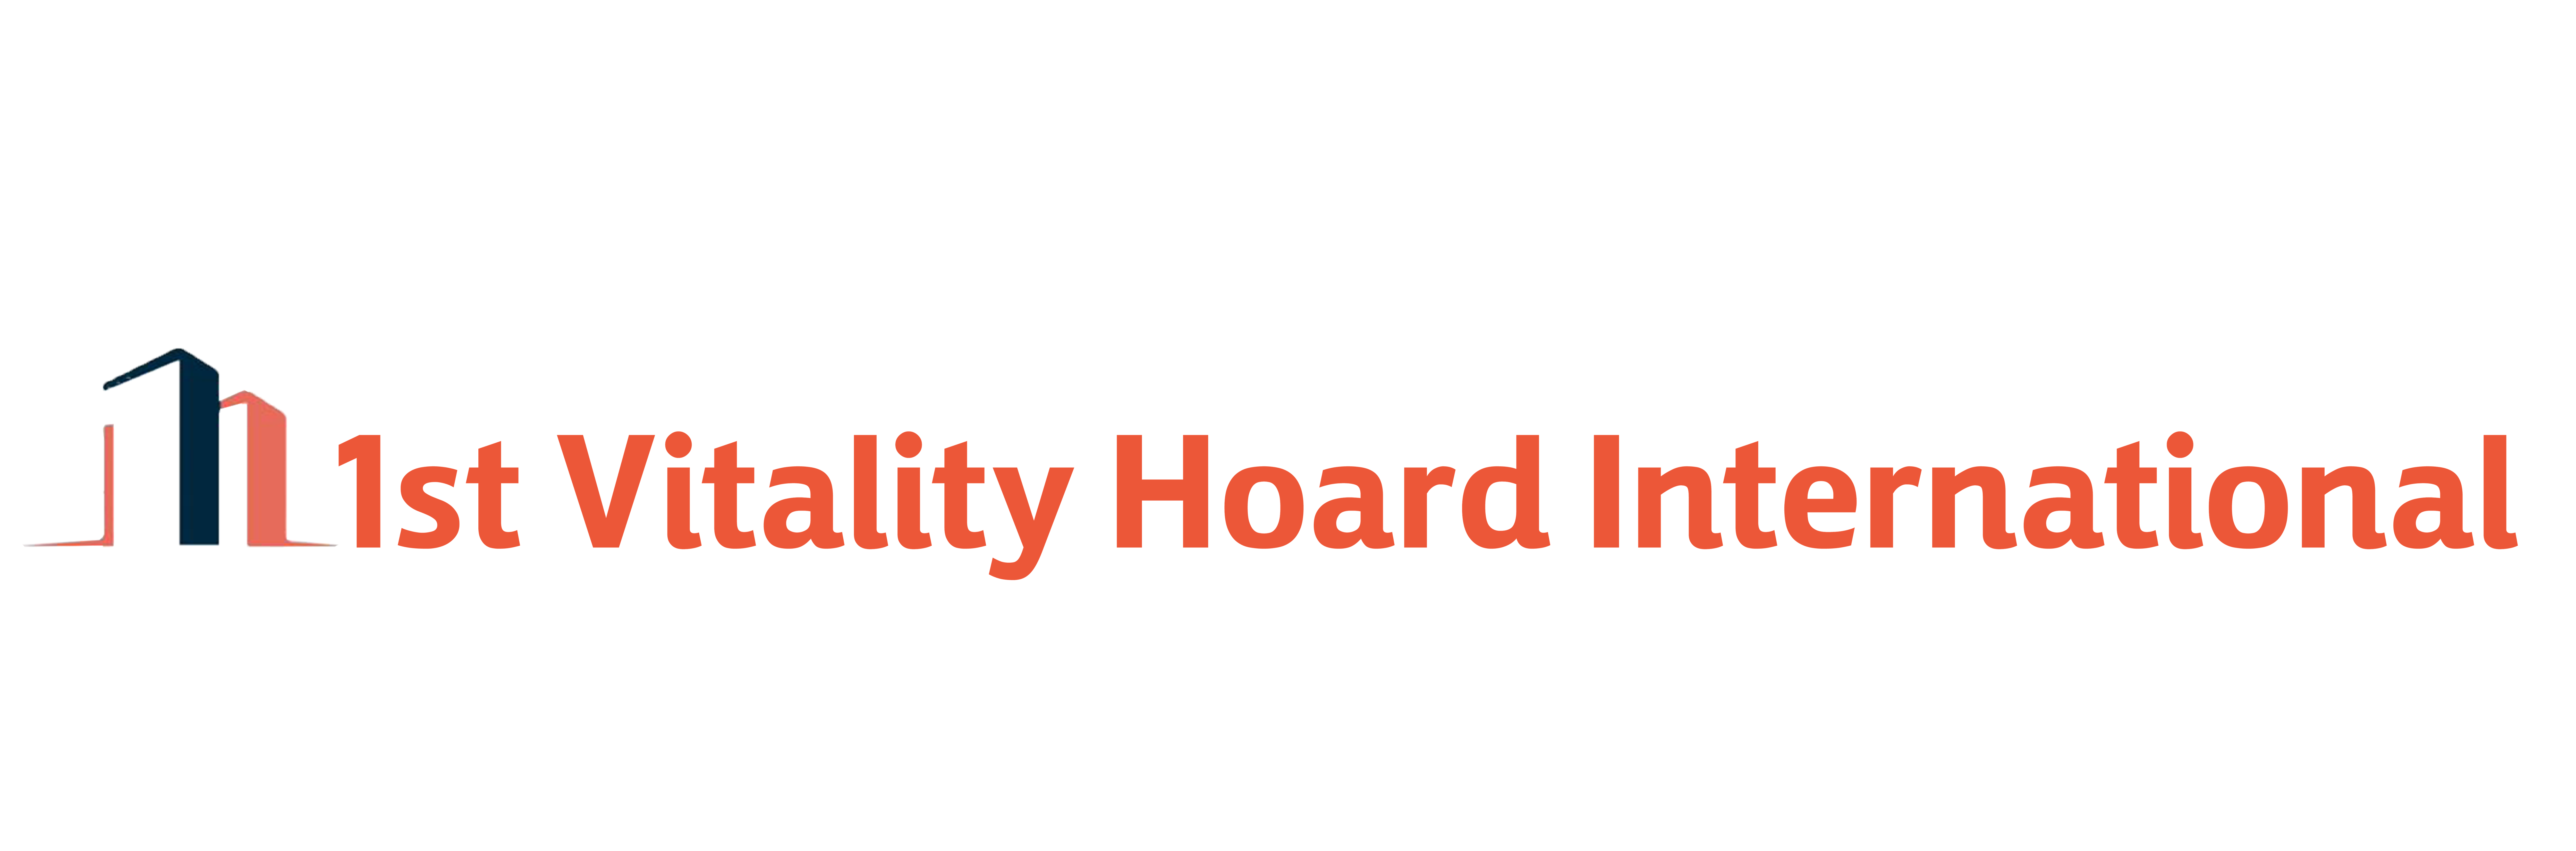 1st Vitality Hoard International